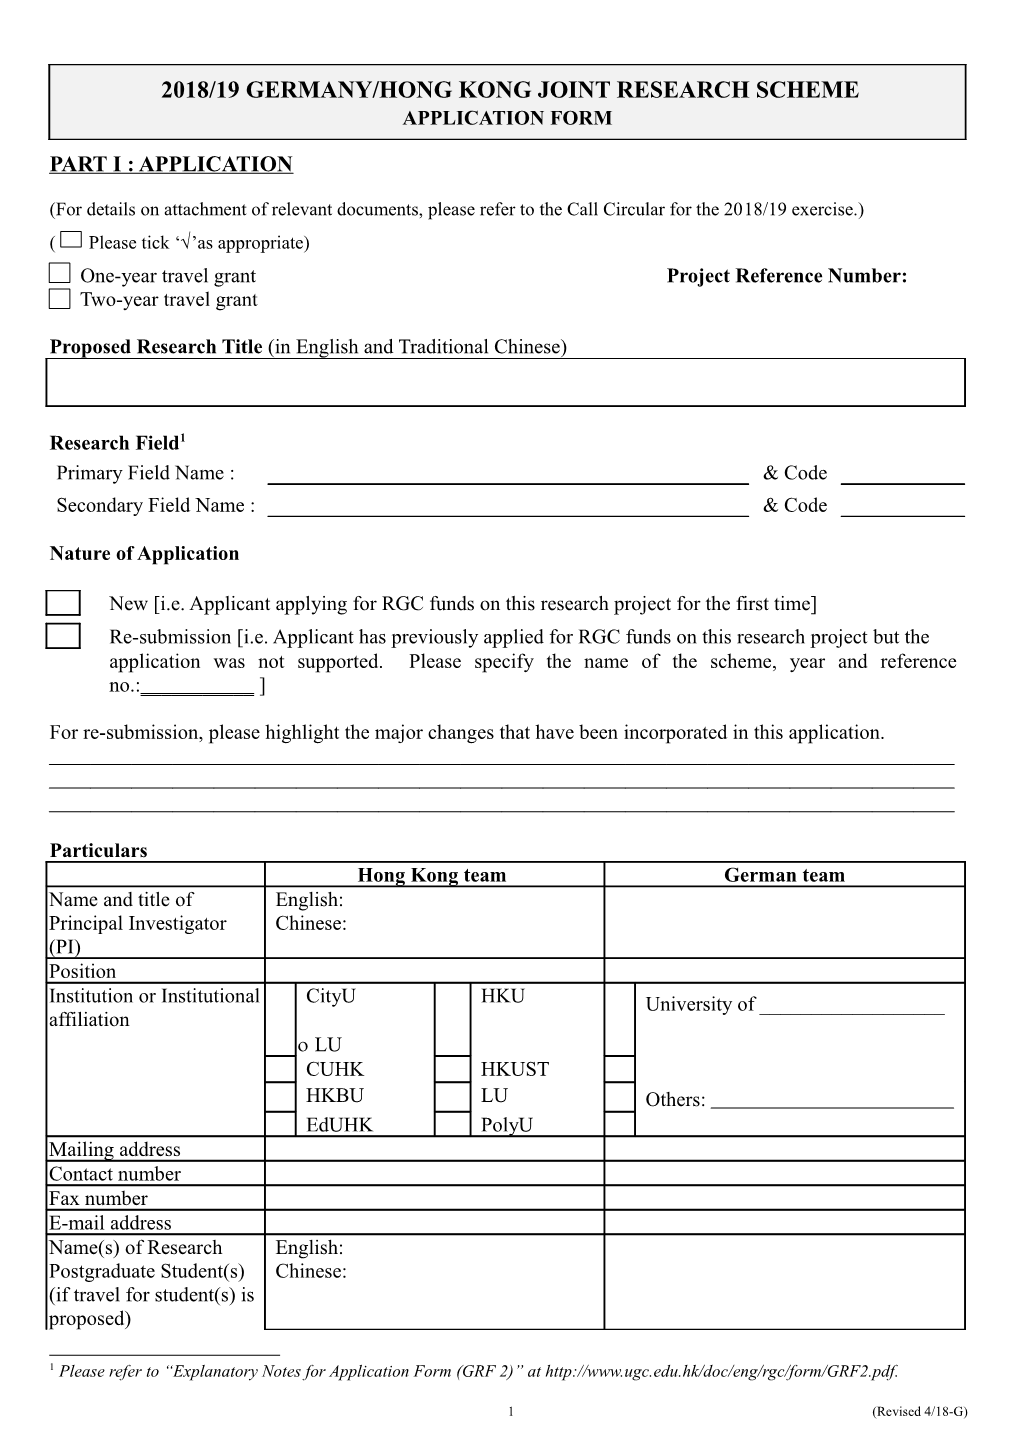 Germany/HK Joint Research Scheme Application 2012